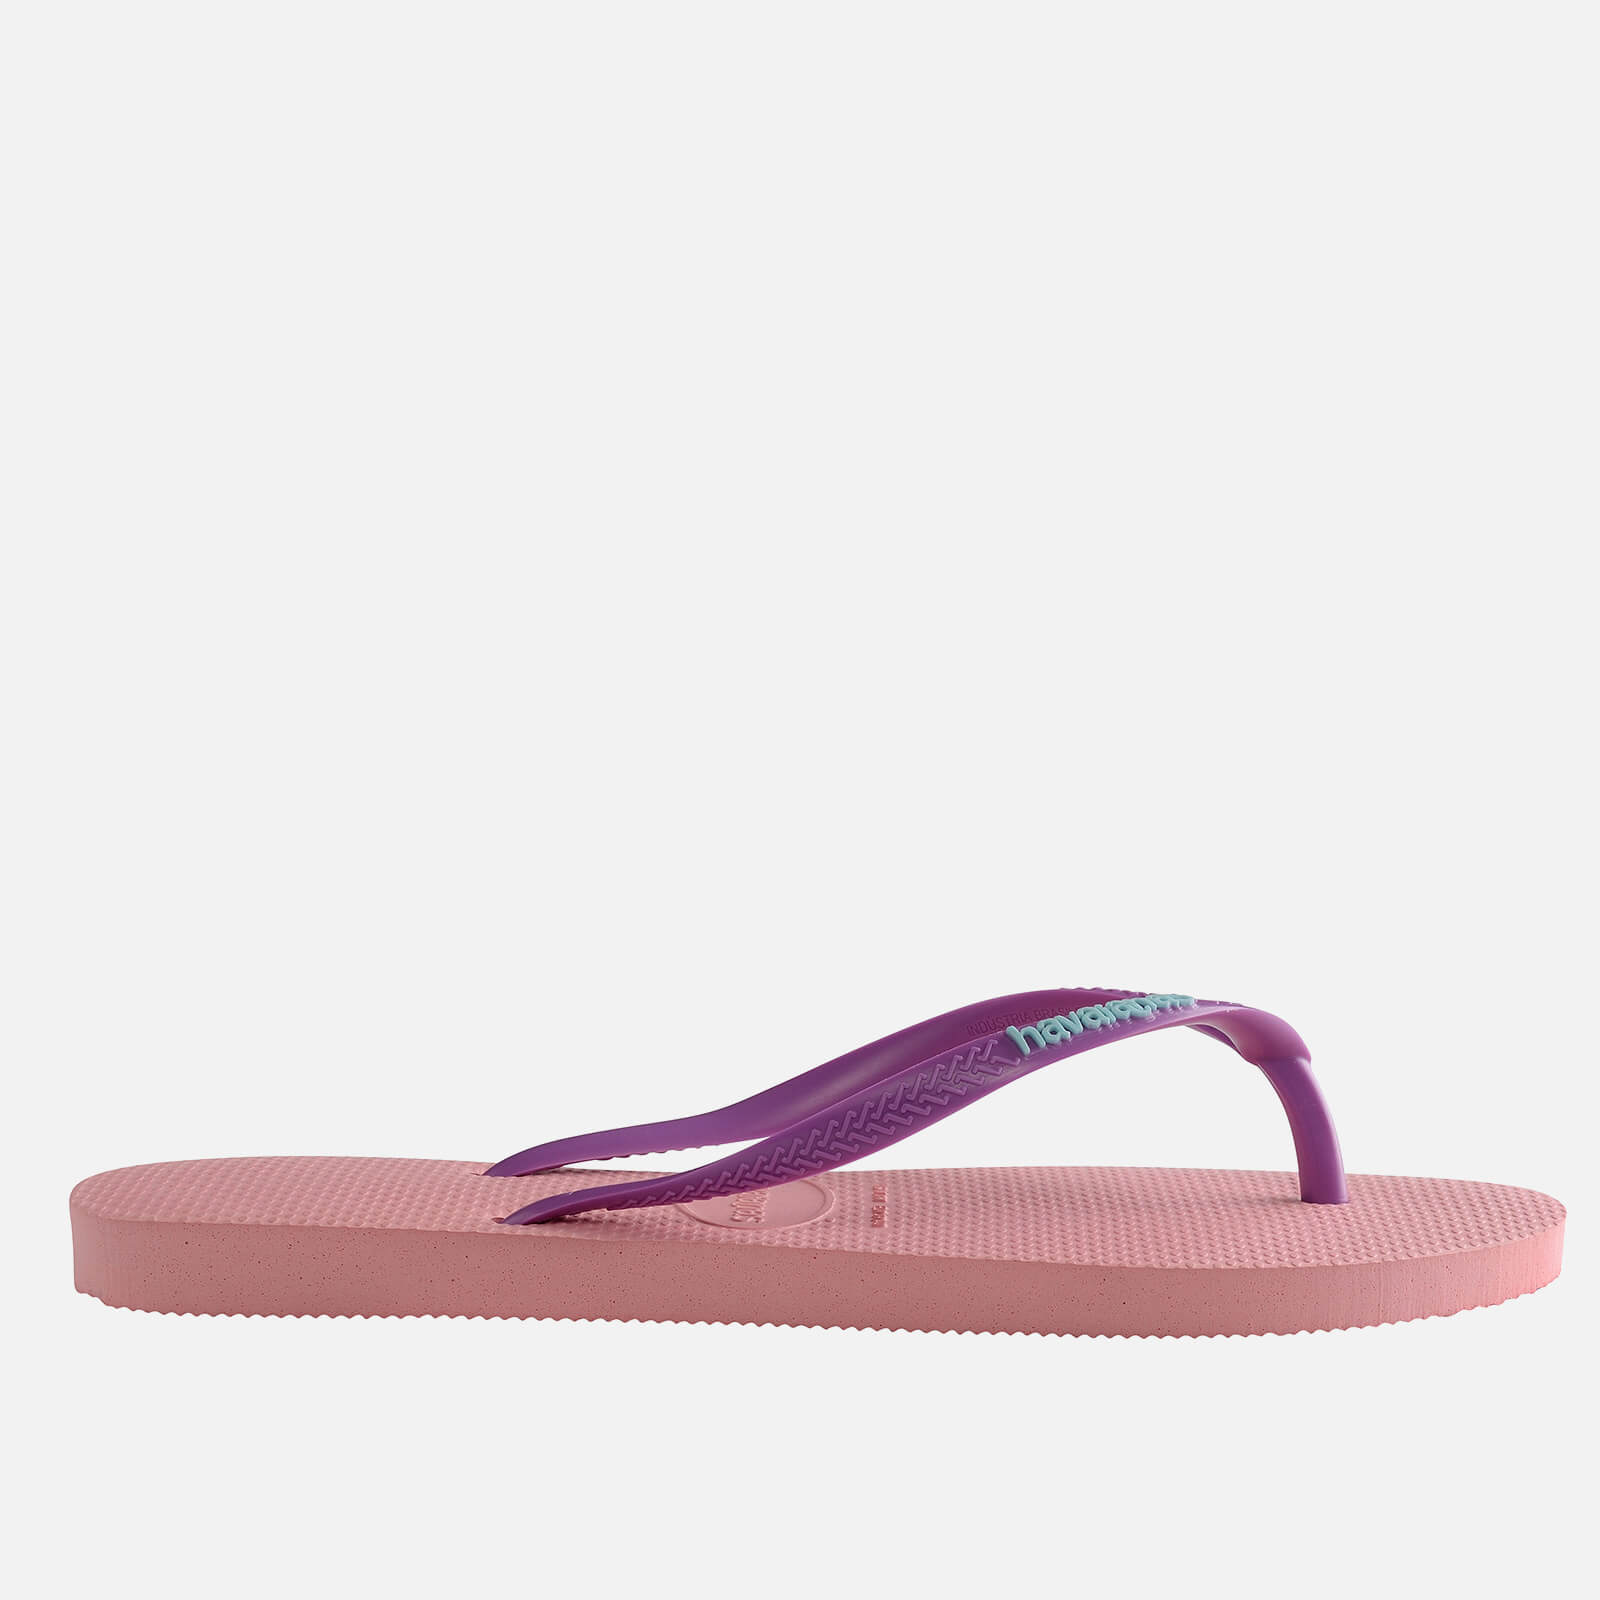 Havaianas Women's Slim Logo Flip Flops - Macaron Pink - UK 3/UK 4